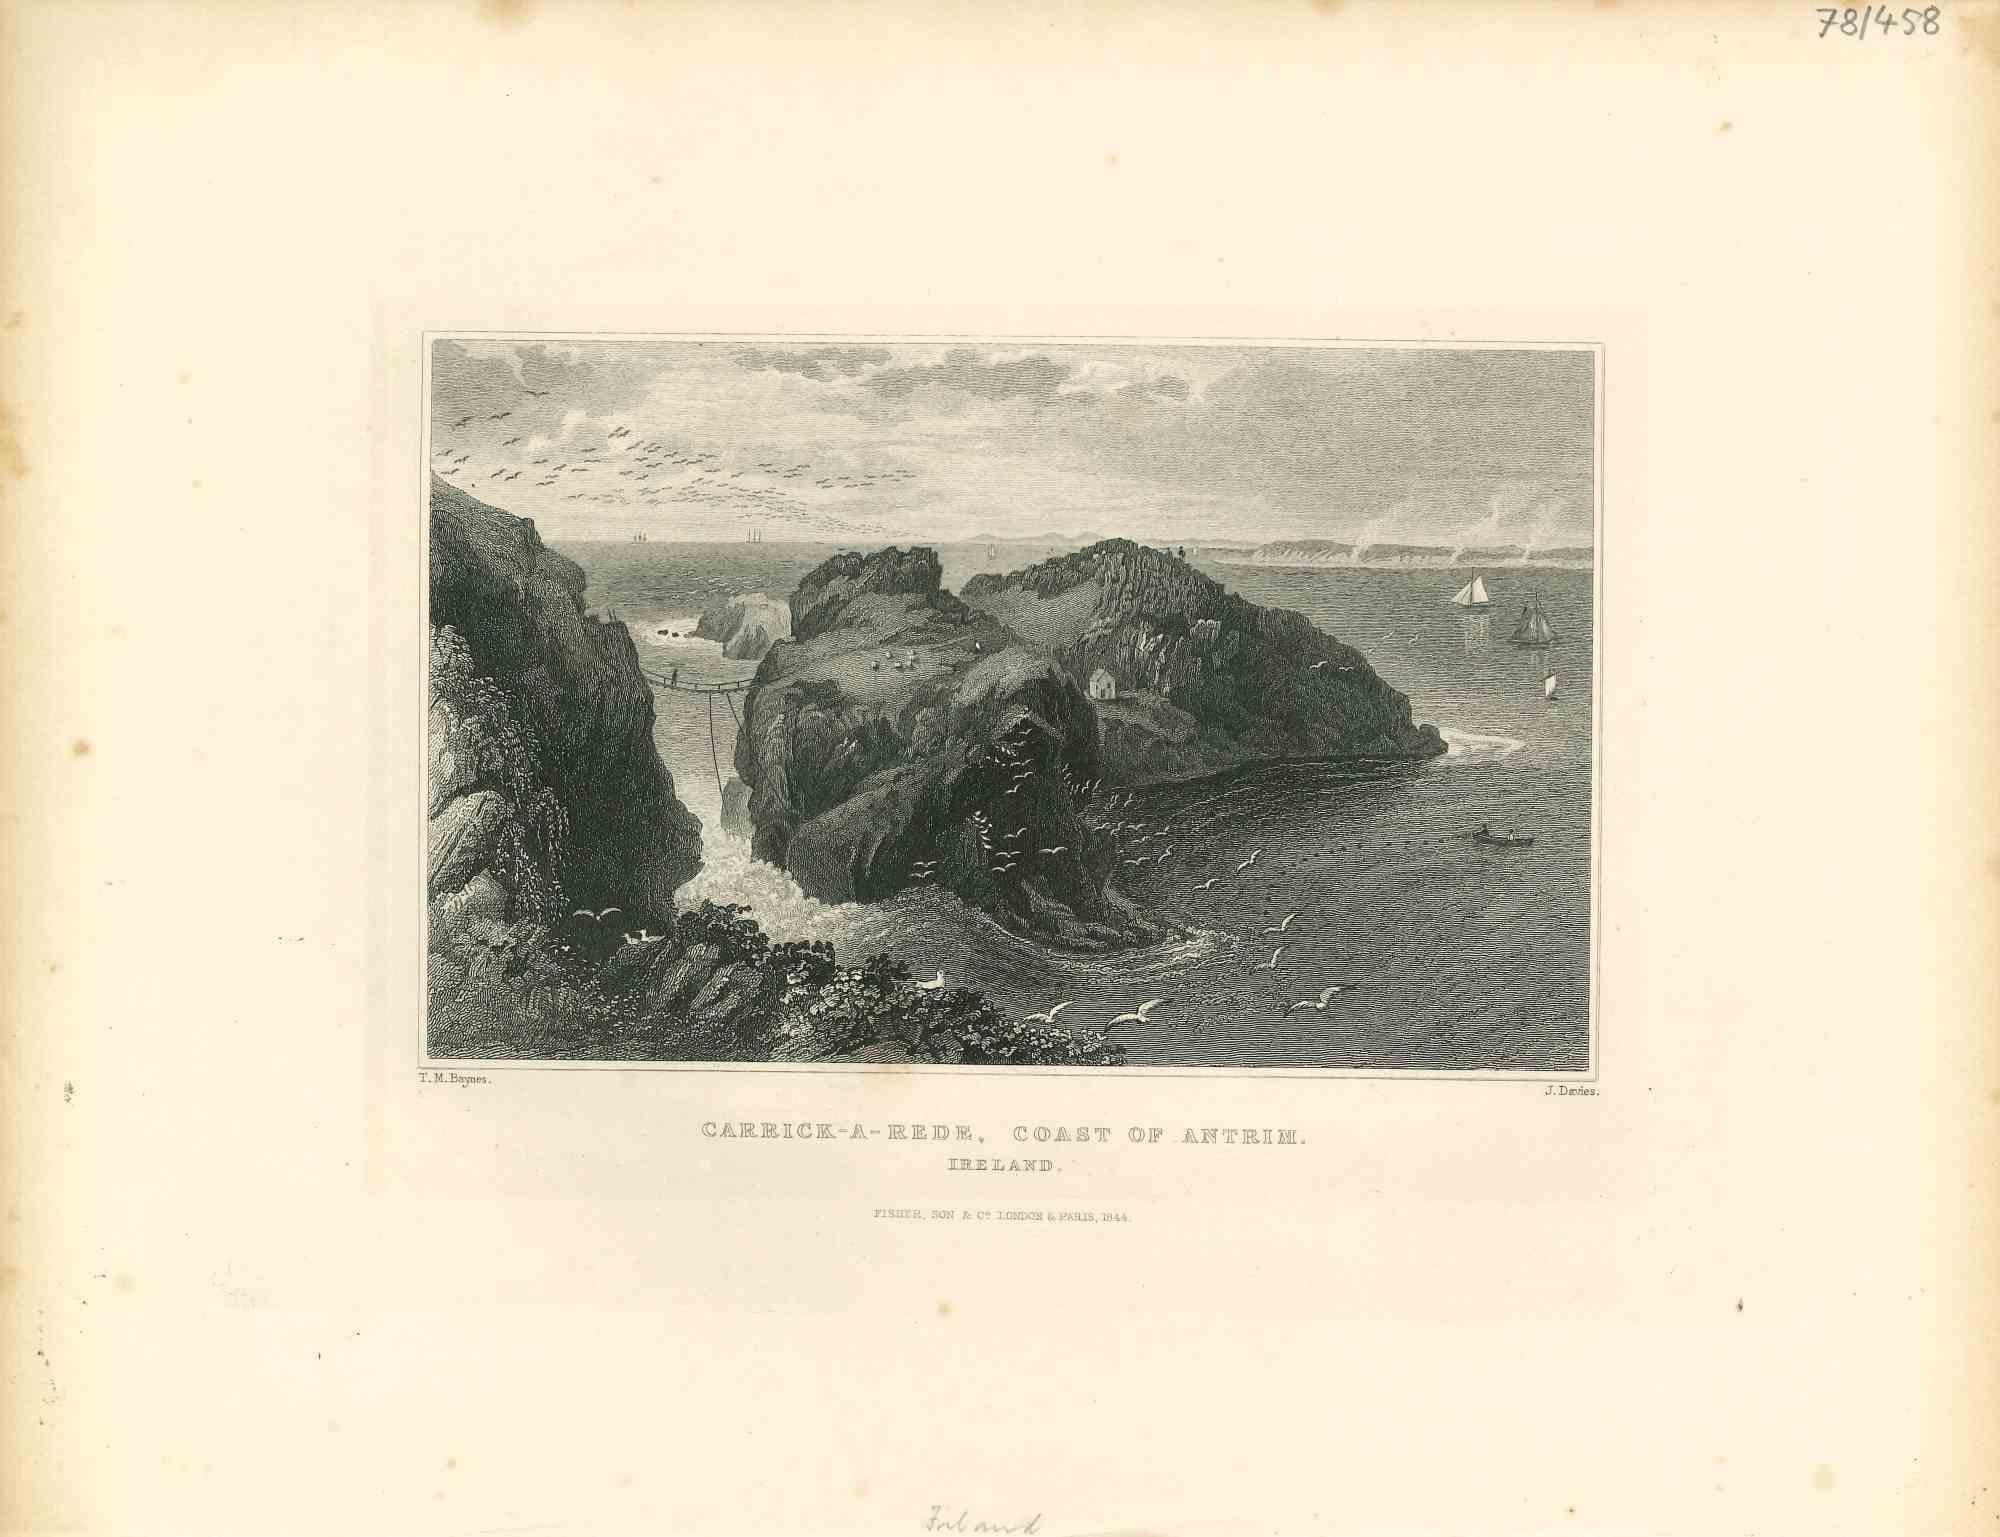 Unknown Landscape Print - Carrick-a-Rede, Coast of Antrim - Original Lithograph - Mid-19th Century